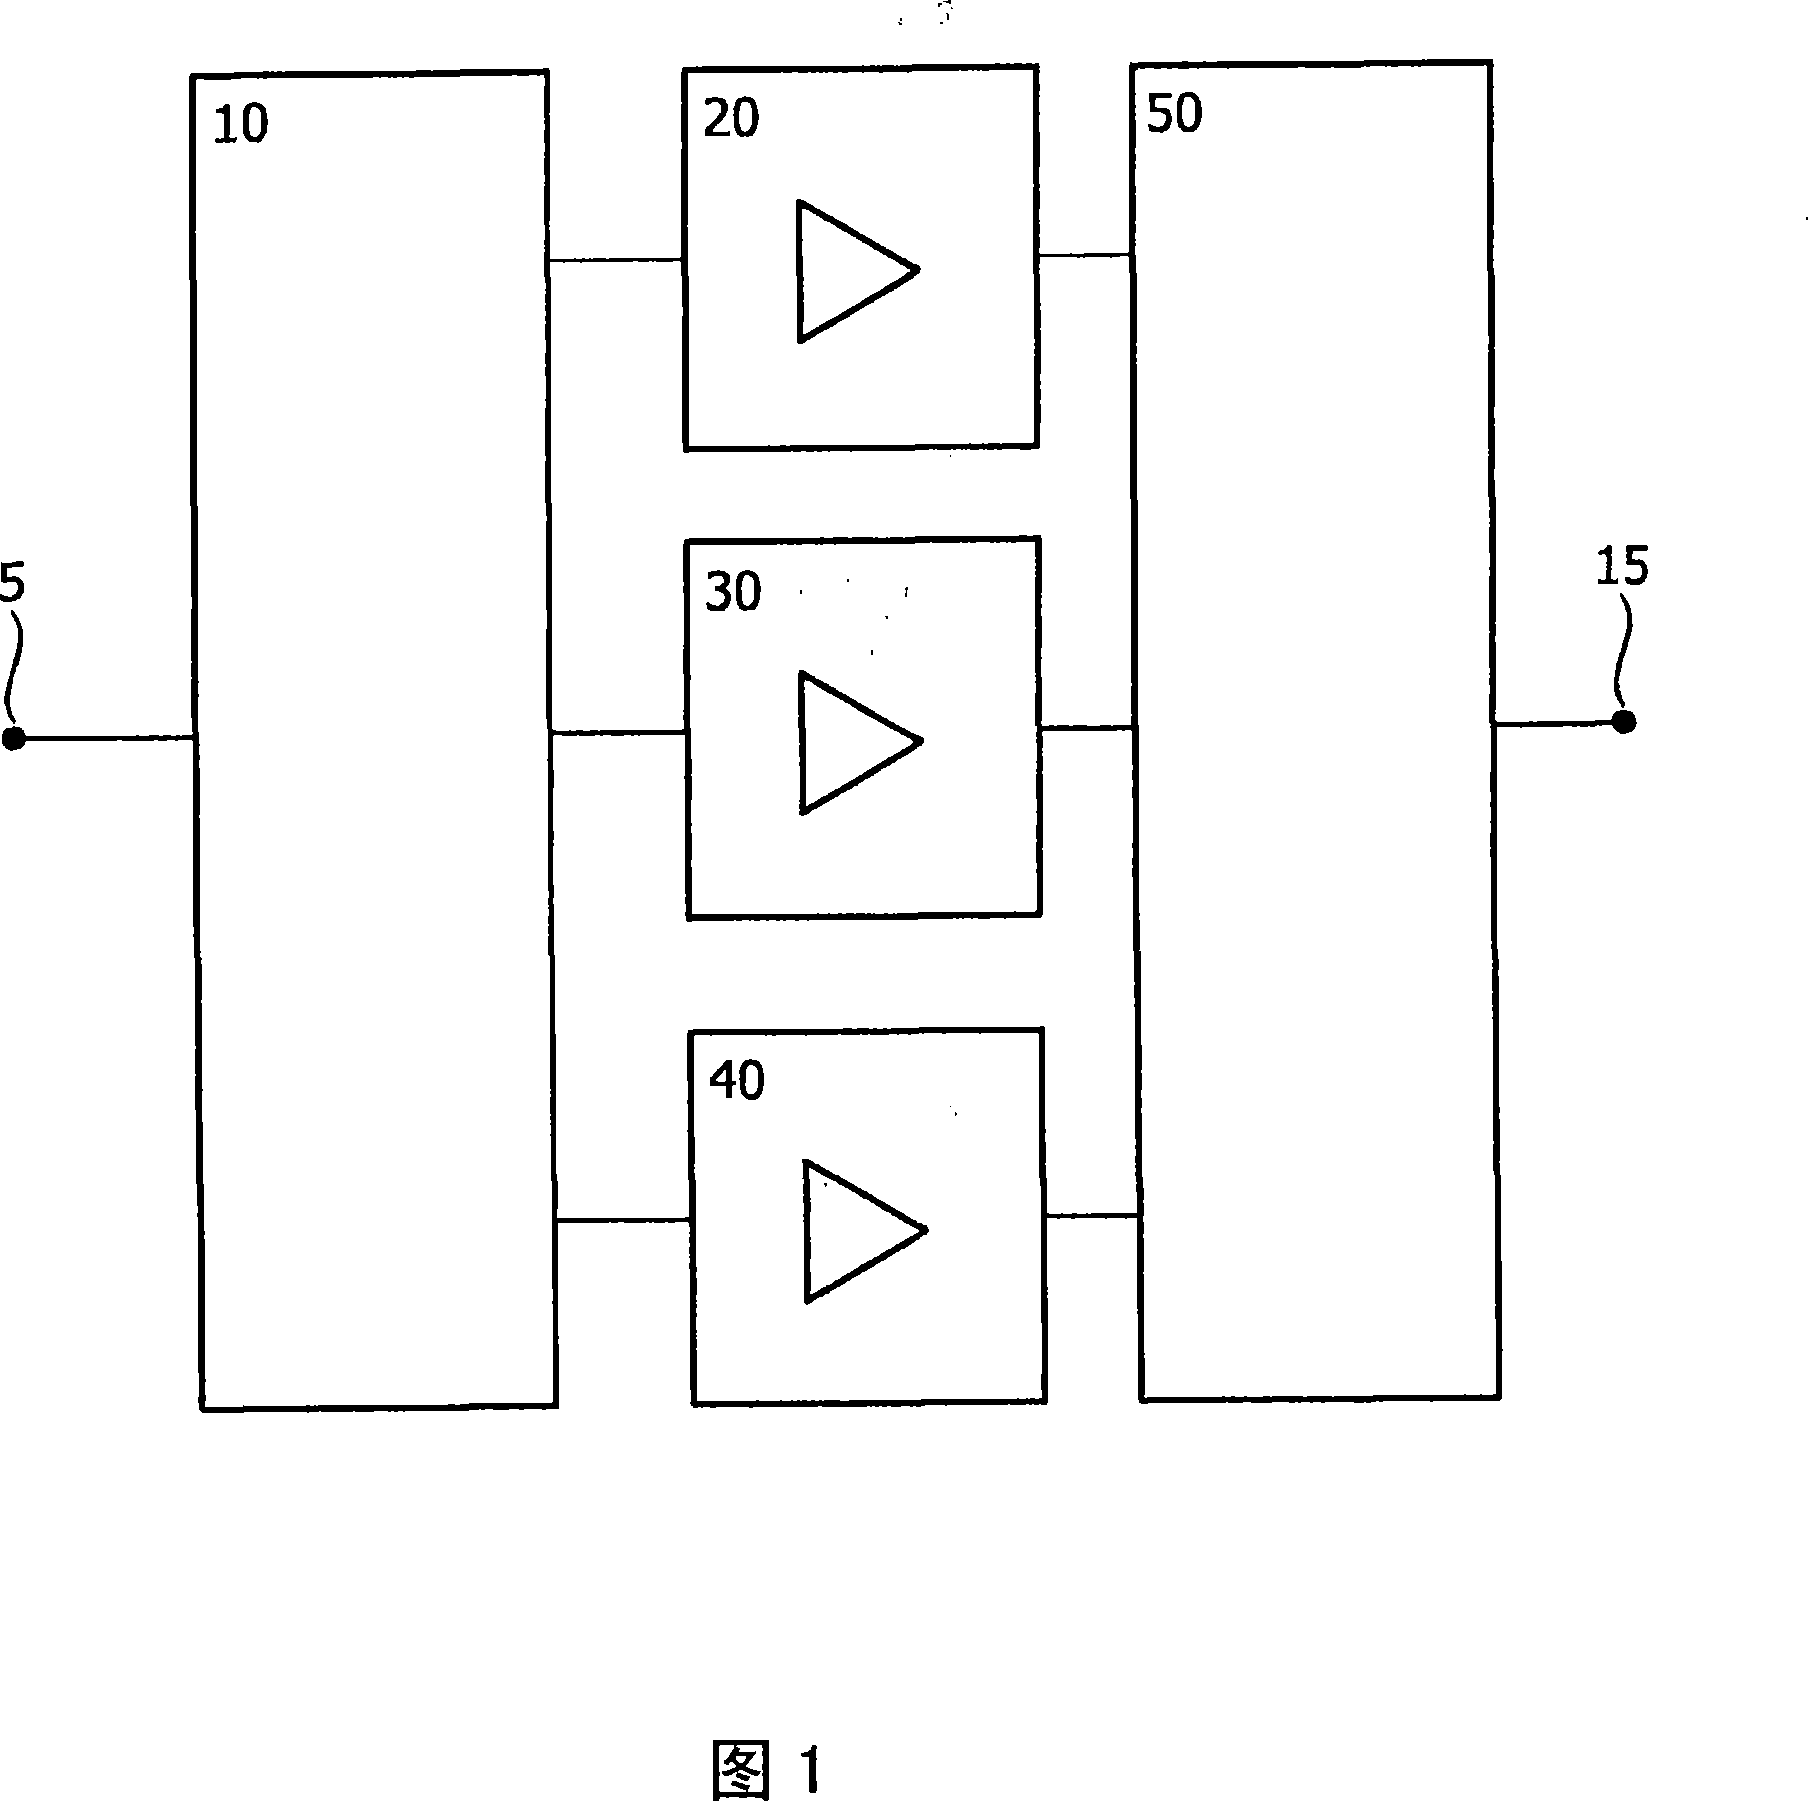 Integrated doherty type amplifier arrangement with high power efficiency